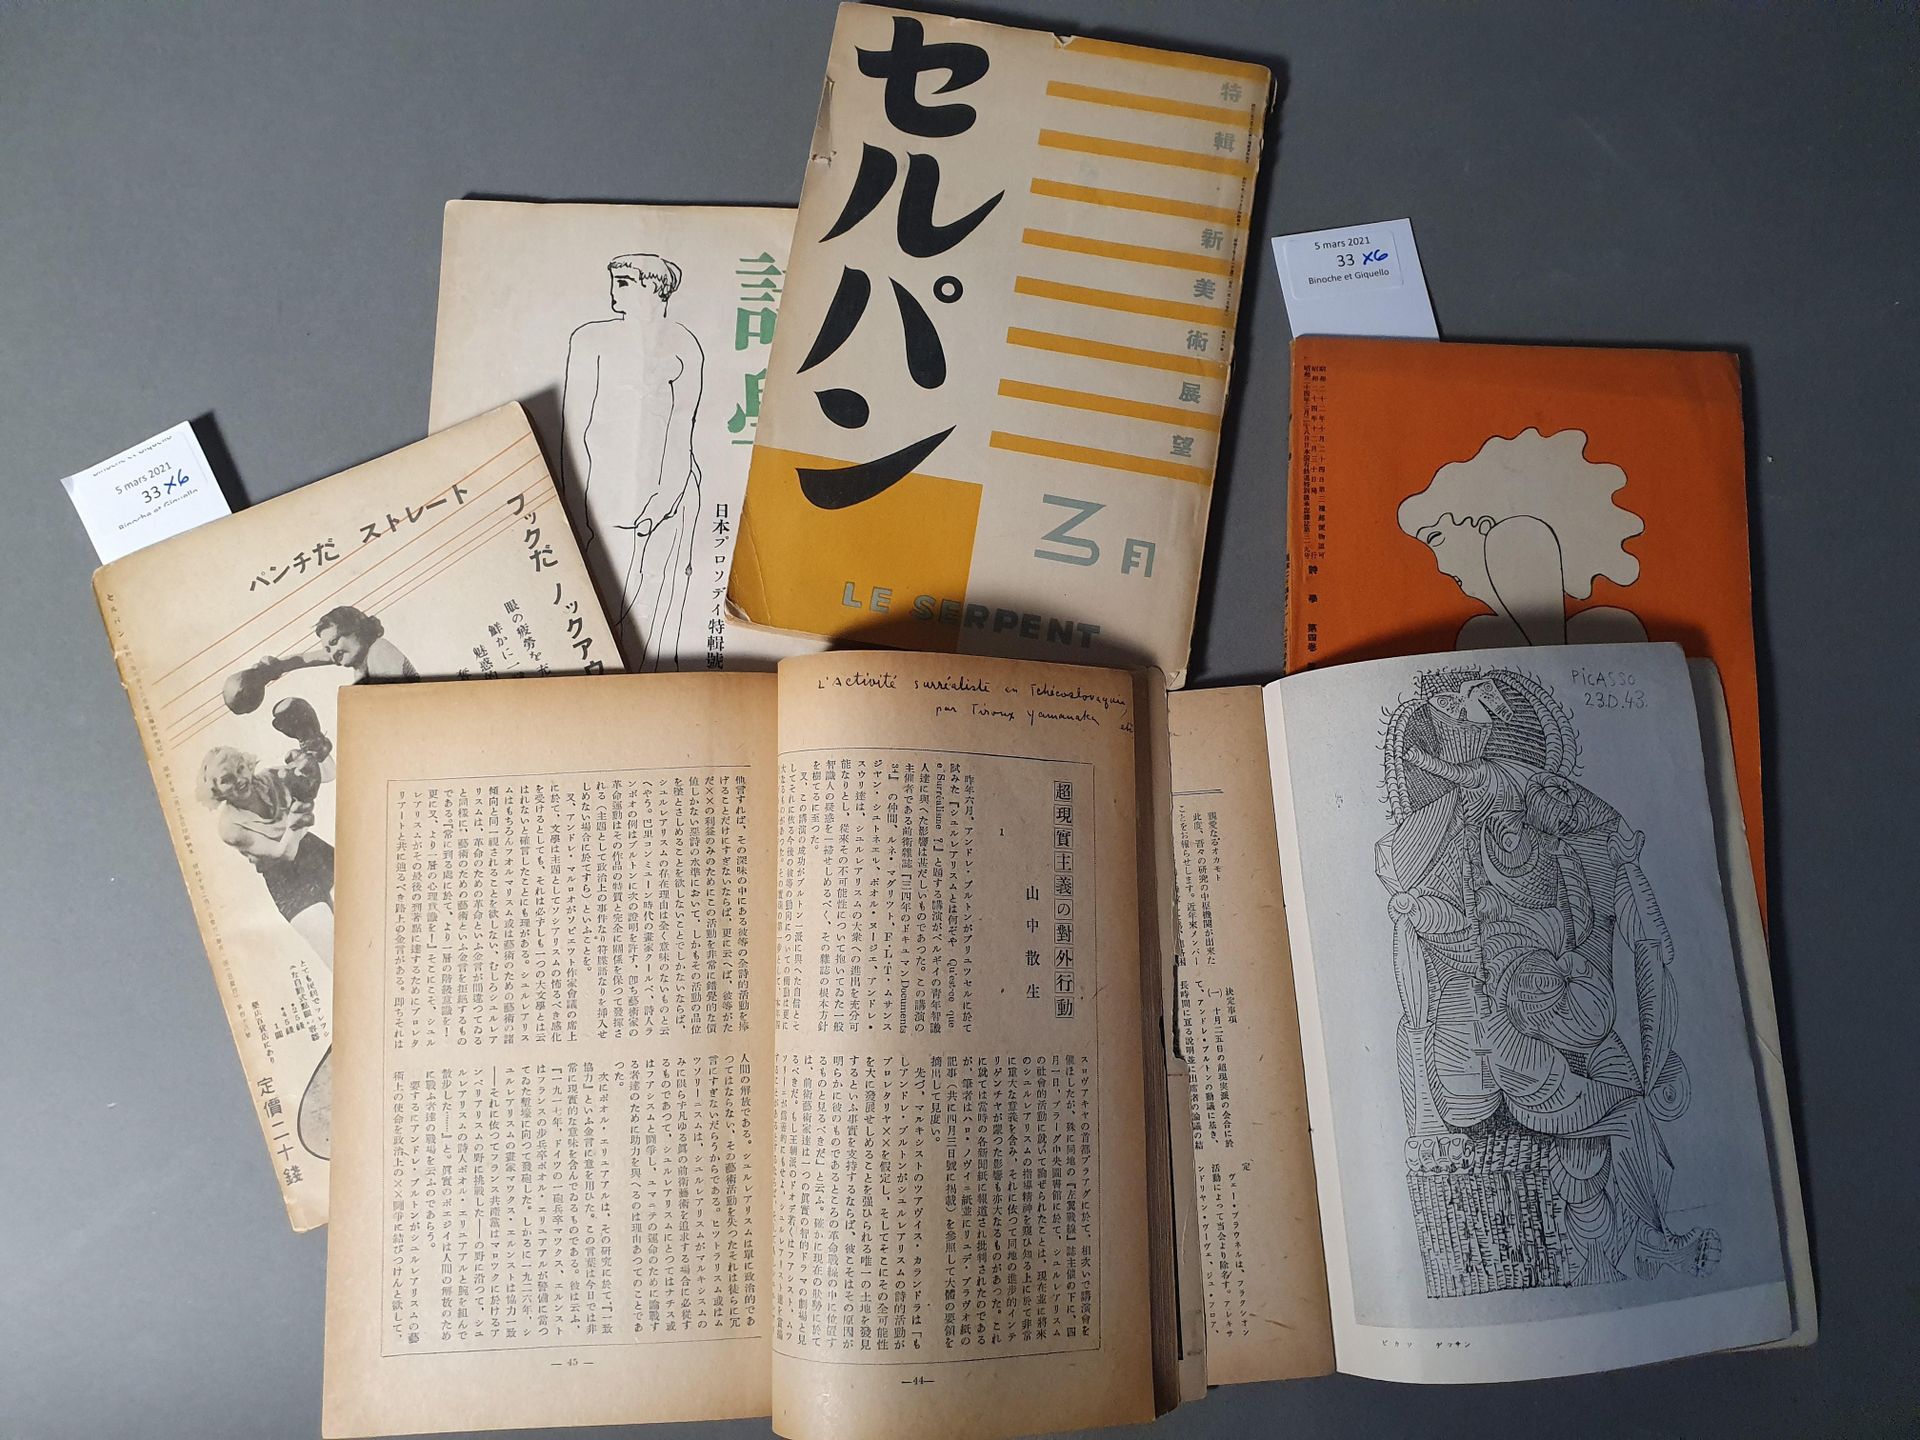 AVANT-GARDE JAPONAISE. CHIGAKON杂志：东京，1949年12月号。8开，平装本，封面有插图。
ANDRÉ BRETON的例子，并附有&hellip;